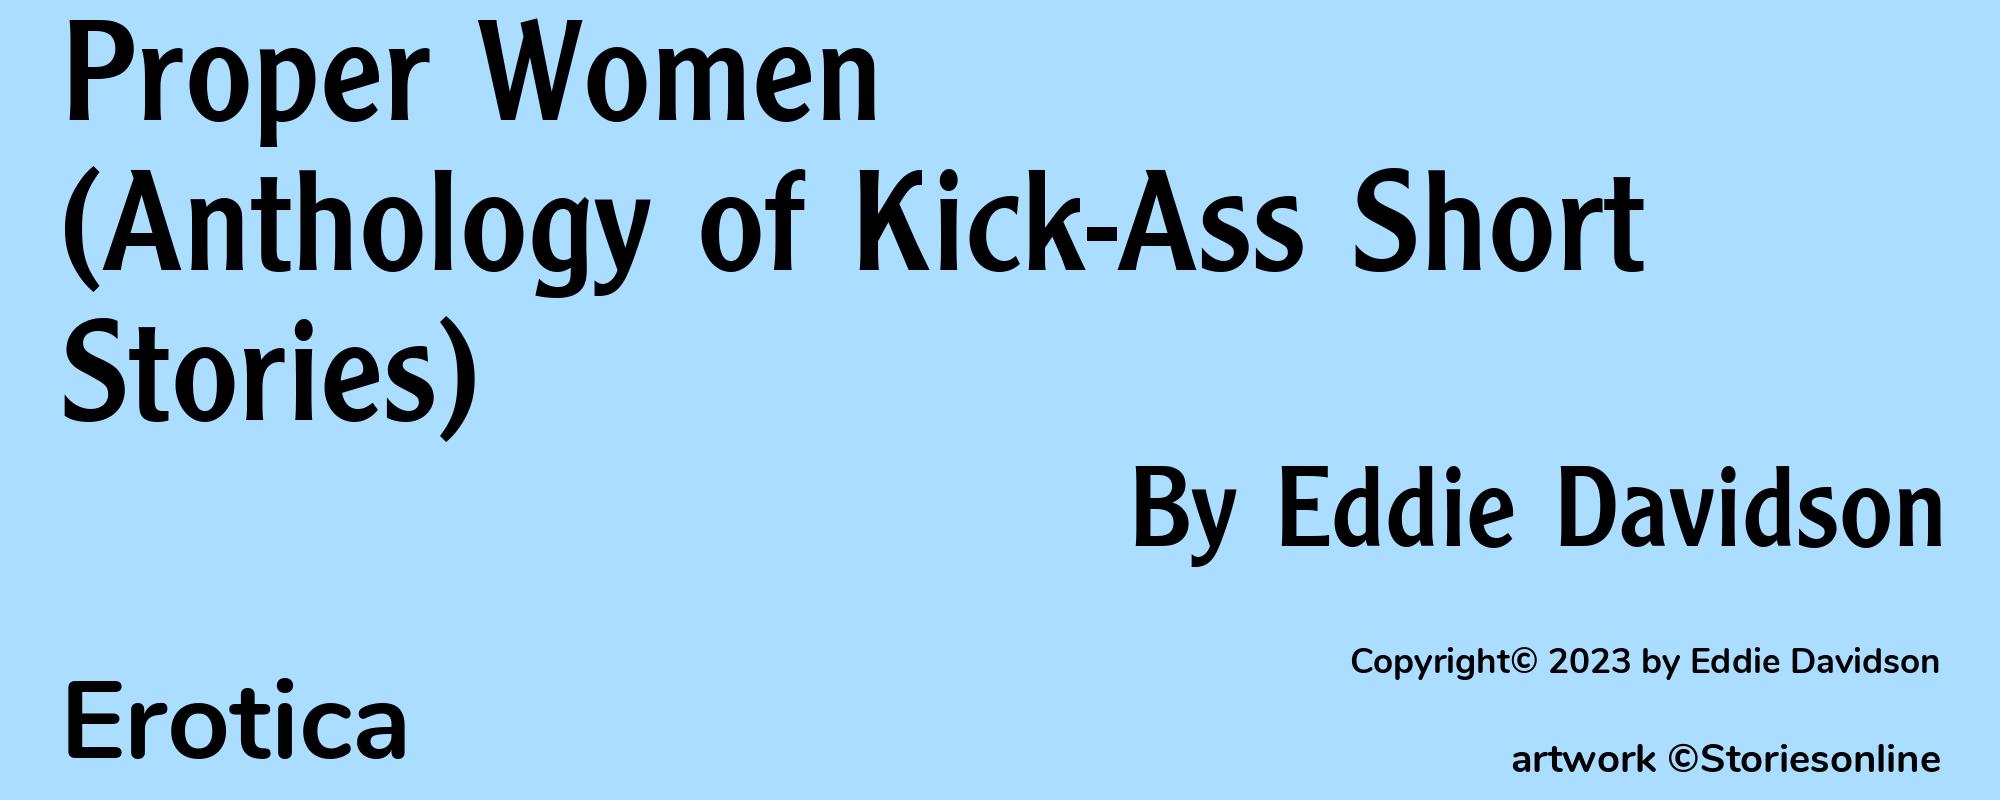 Proper Women (Anthology of Kick-Ass Short Stories) - Cover